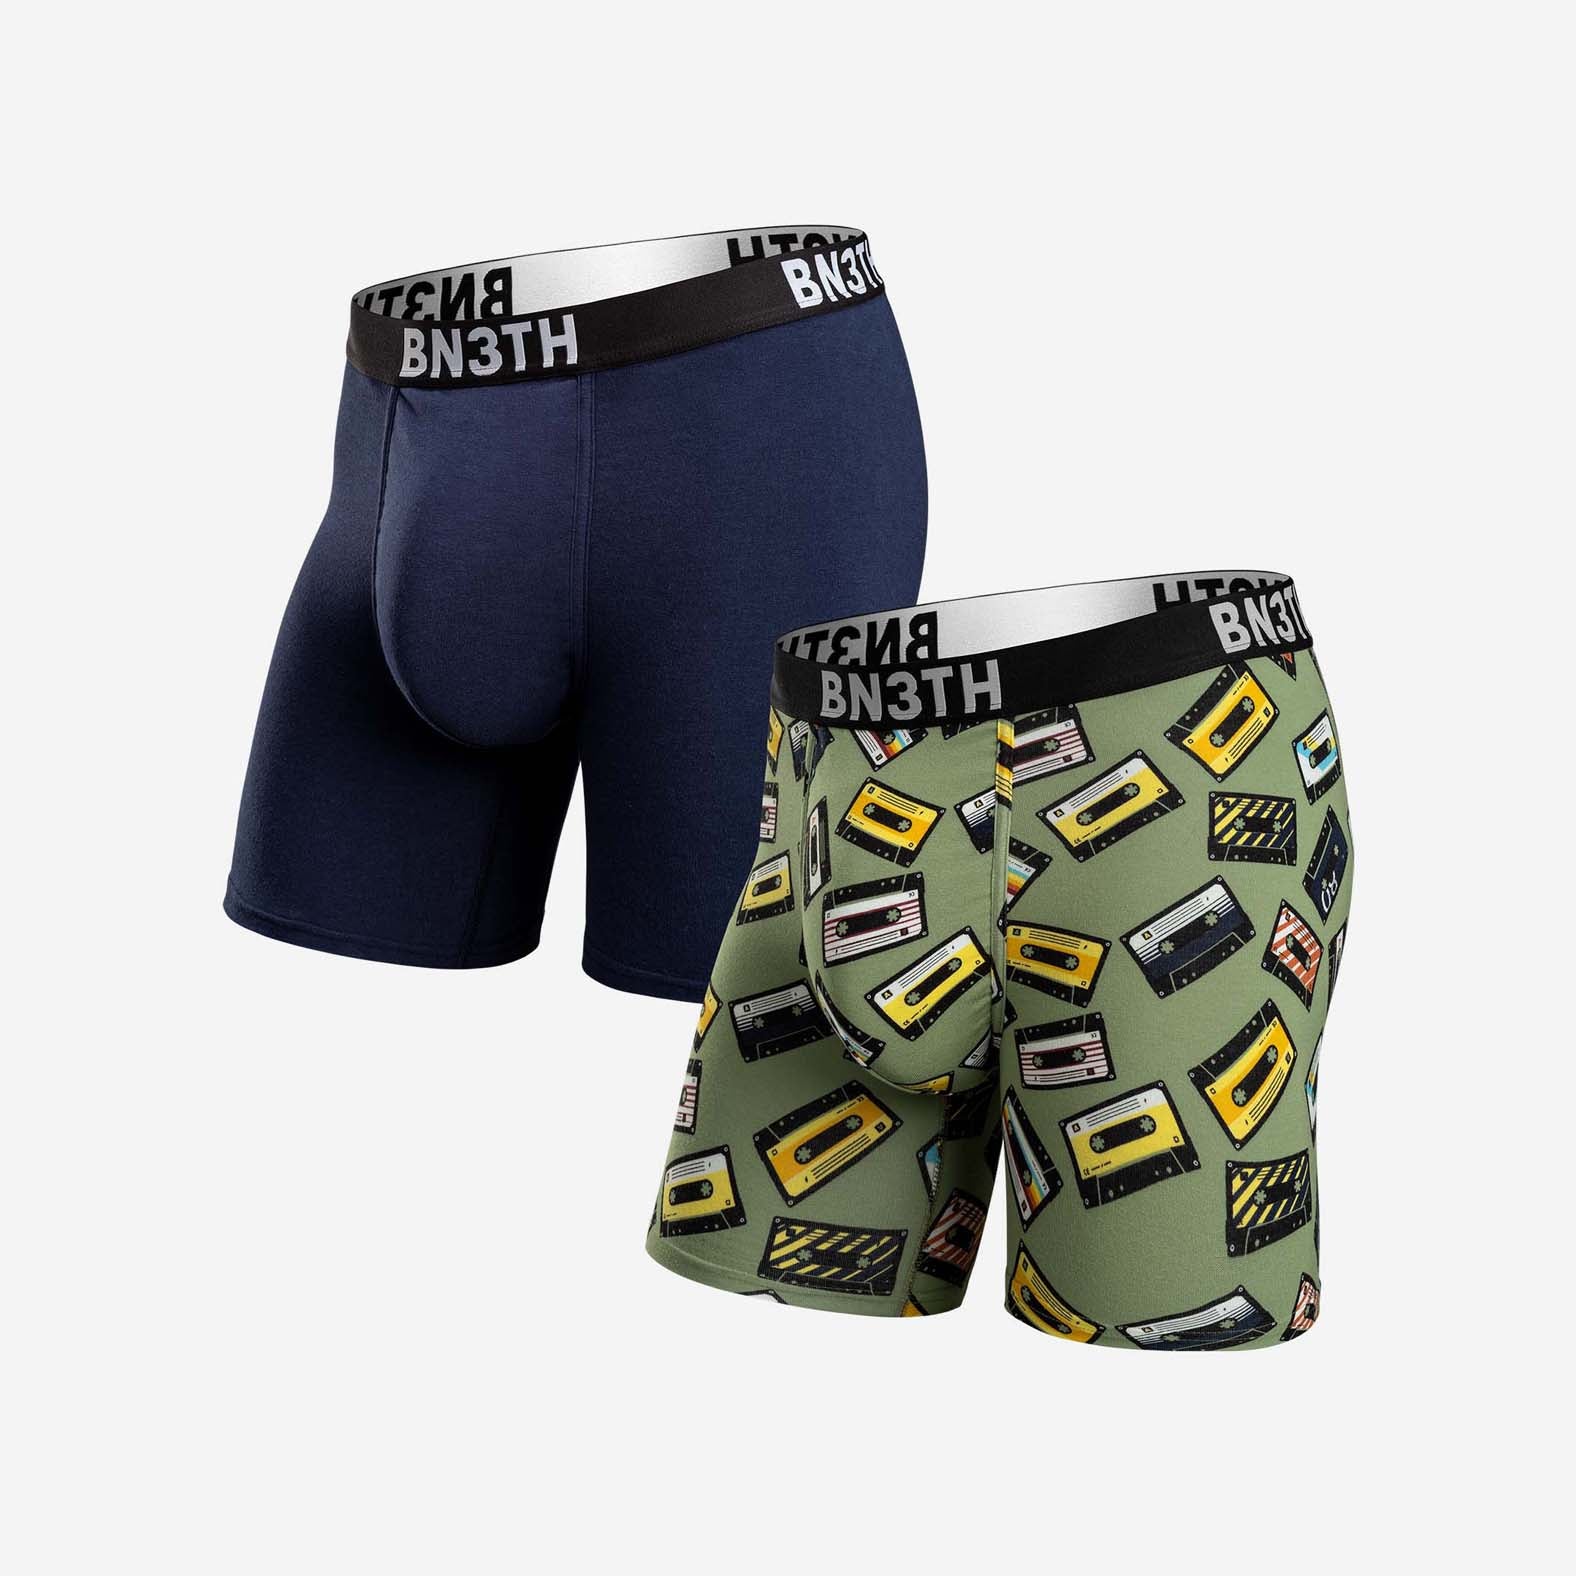 Buy Fortnite Boxers for Boys Underwear Multipack of 2 Boys Boxer